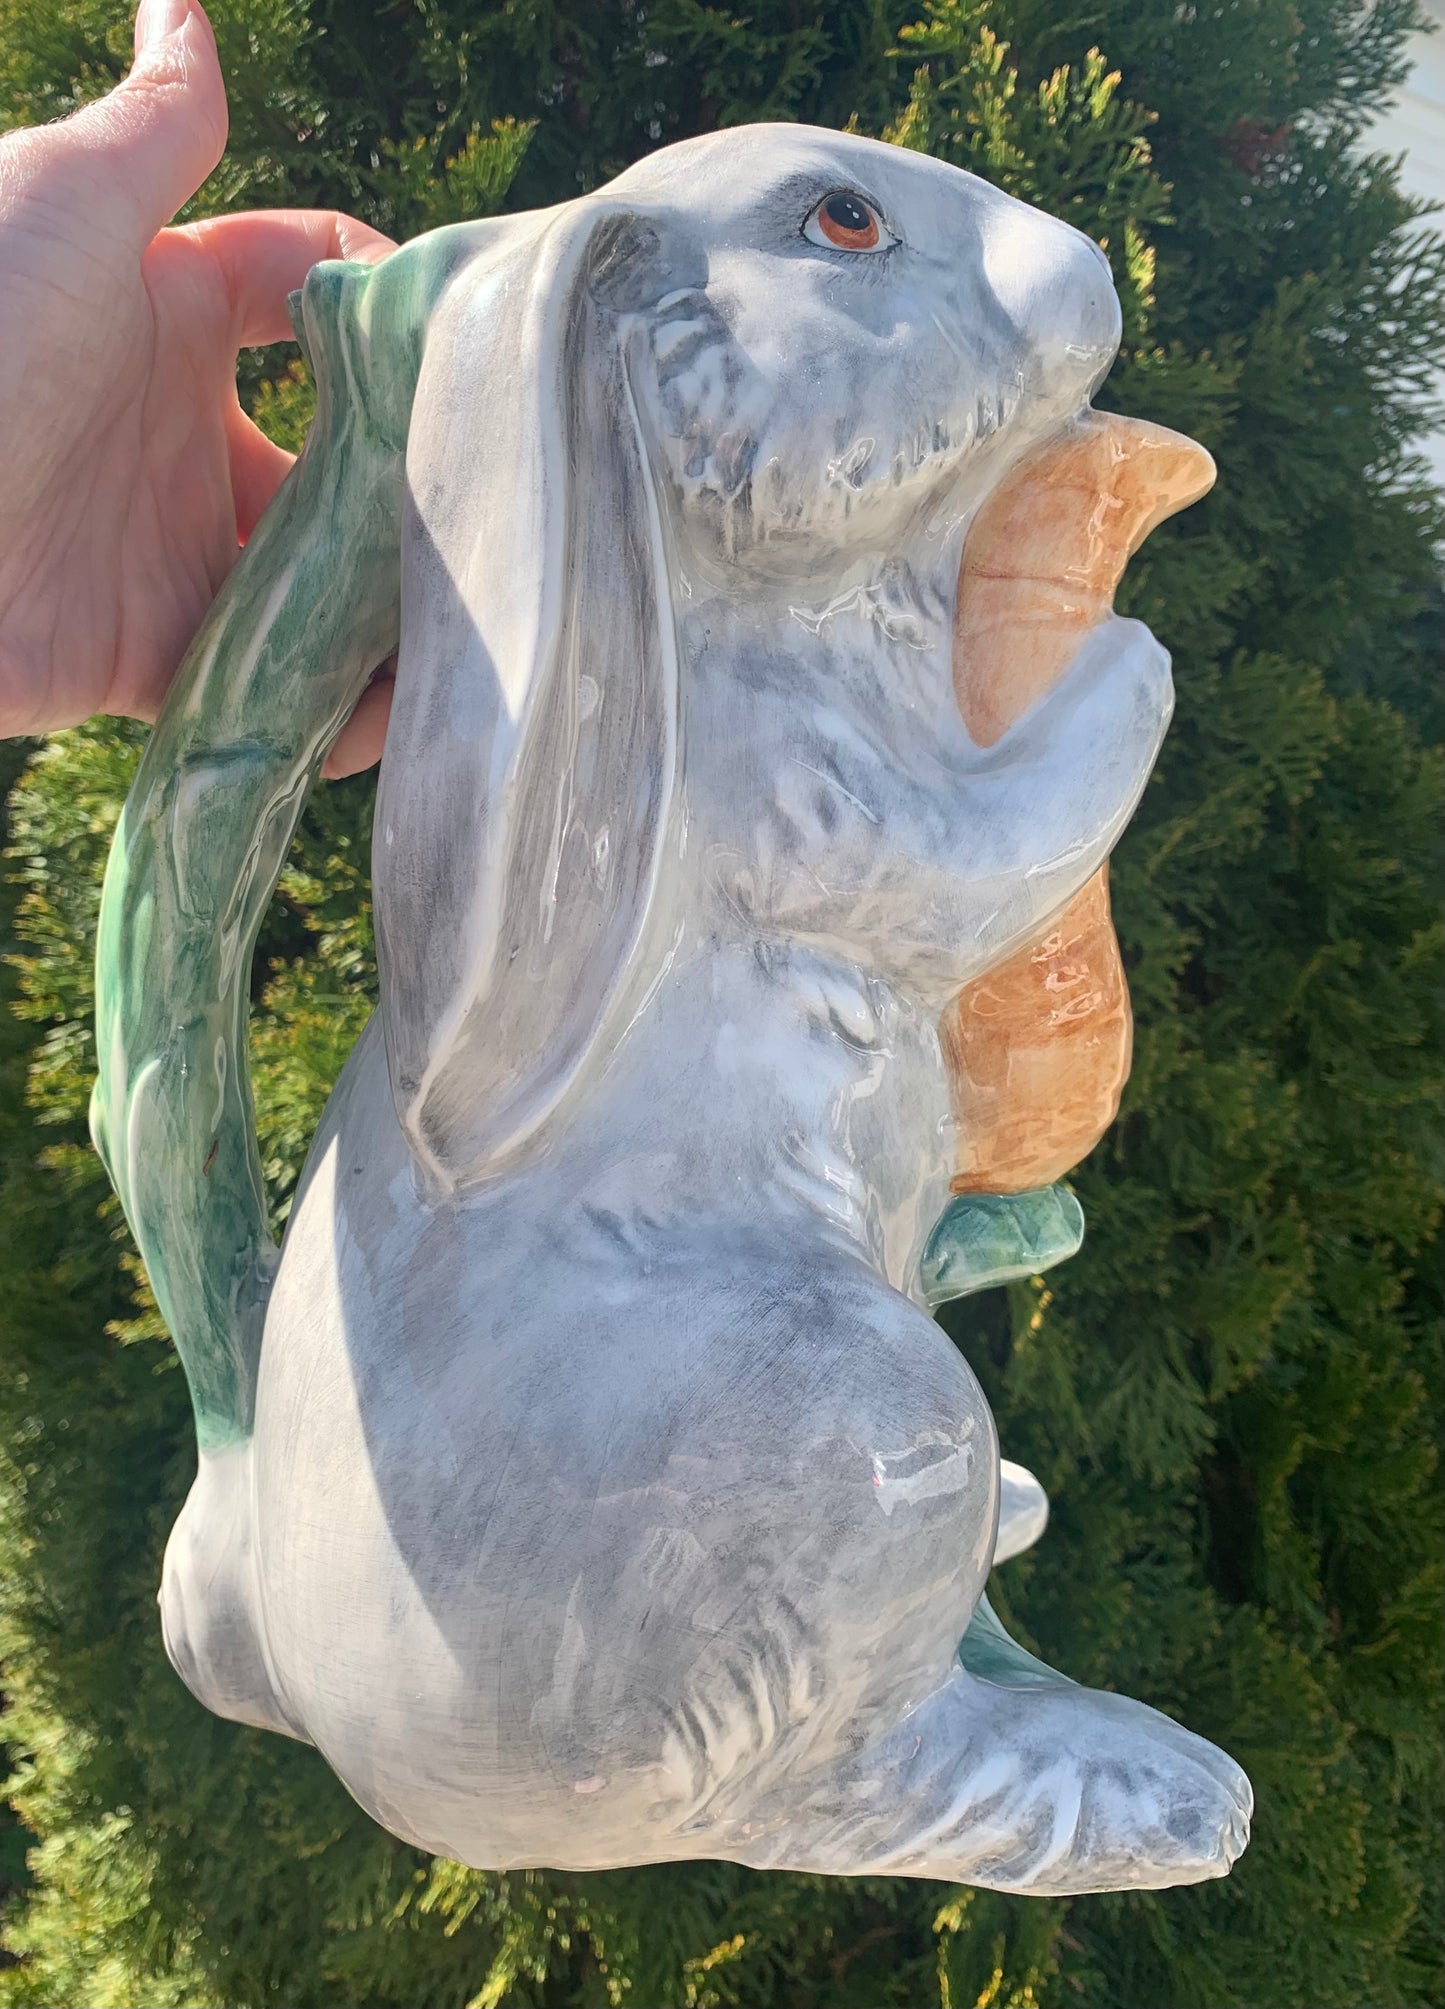 Sweetest Italian floppy eared bunny pitcher!